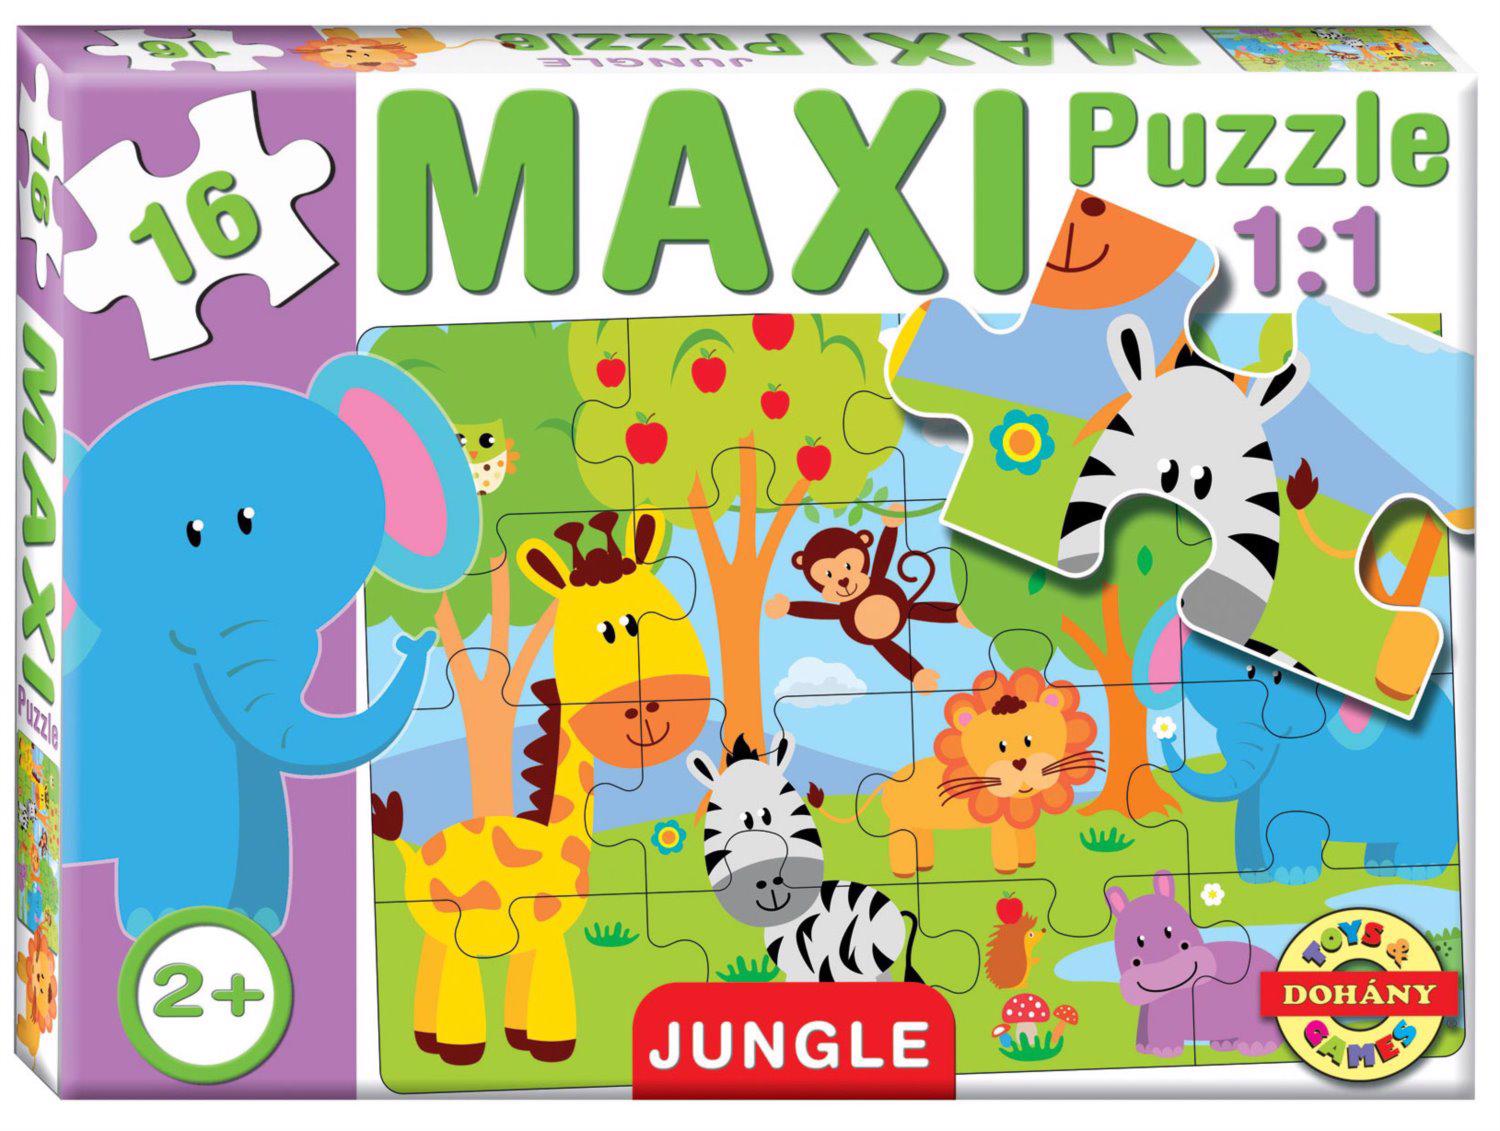 Puzzle Jungle 16 pieces maxi